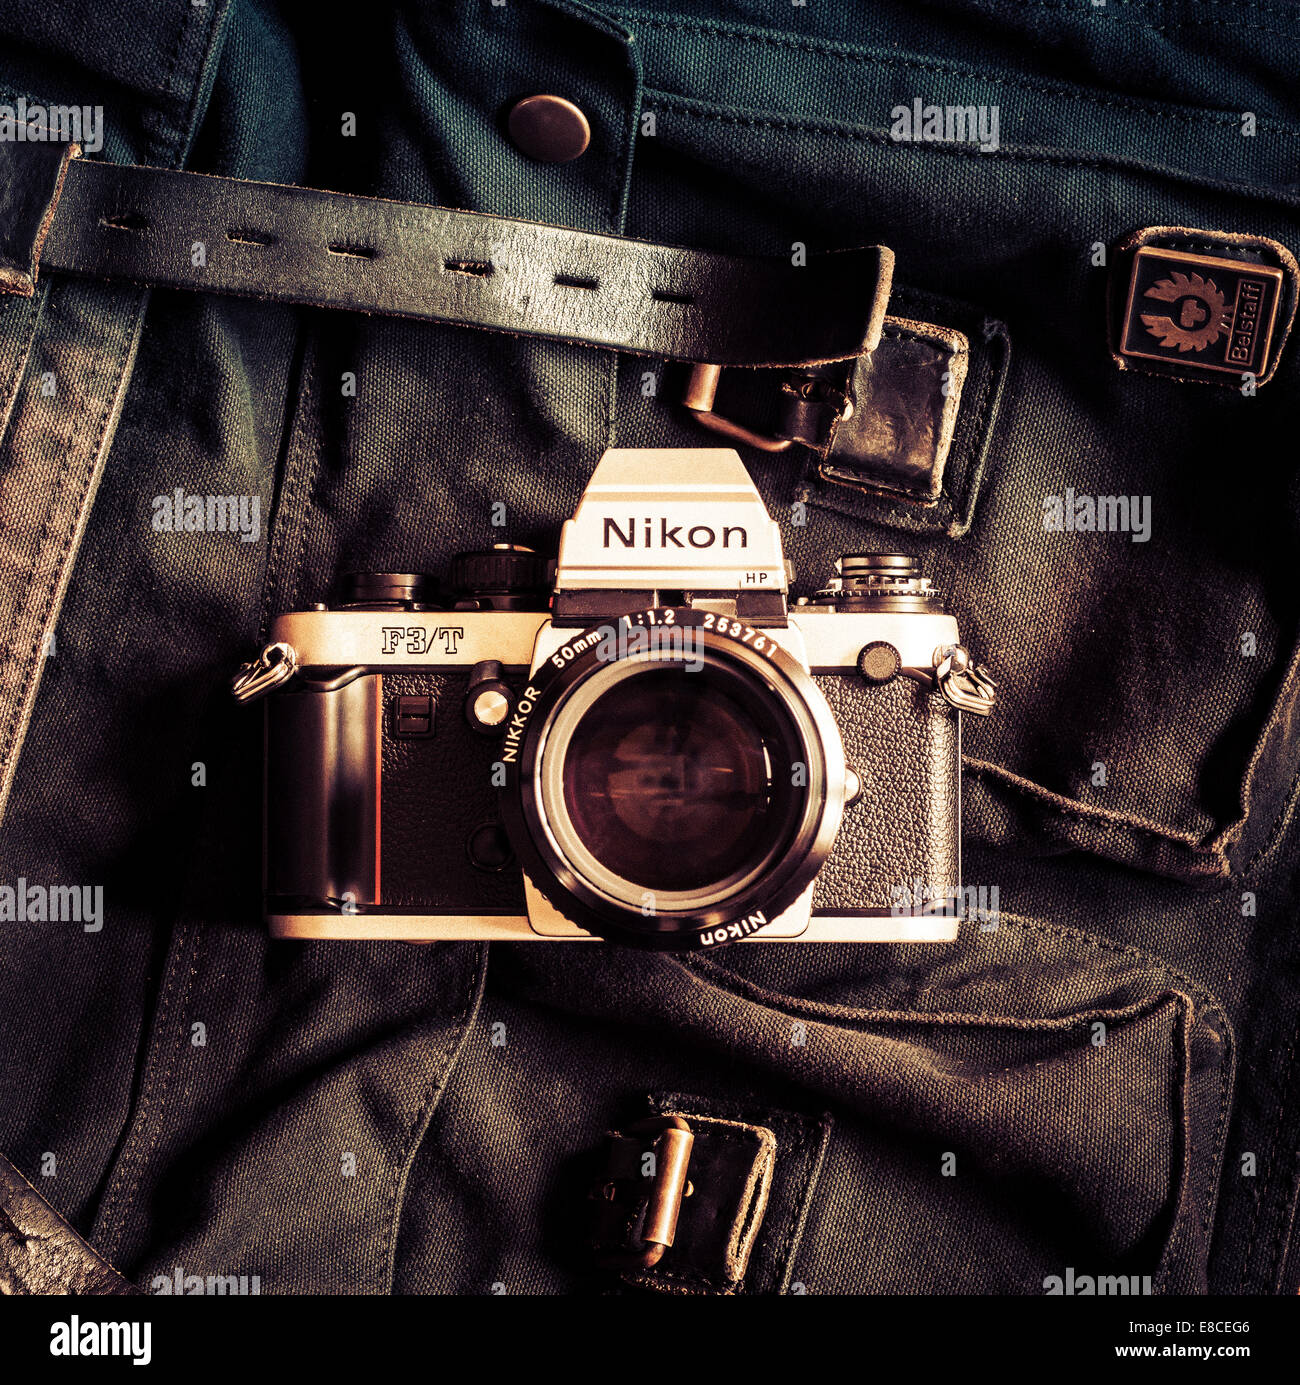 Nikon F3/T classic film camera with Belstaff bag. Stock Photo